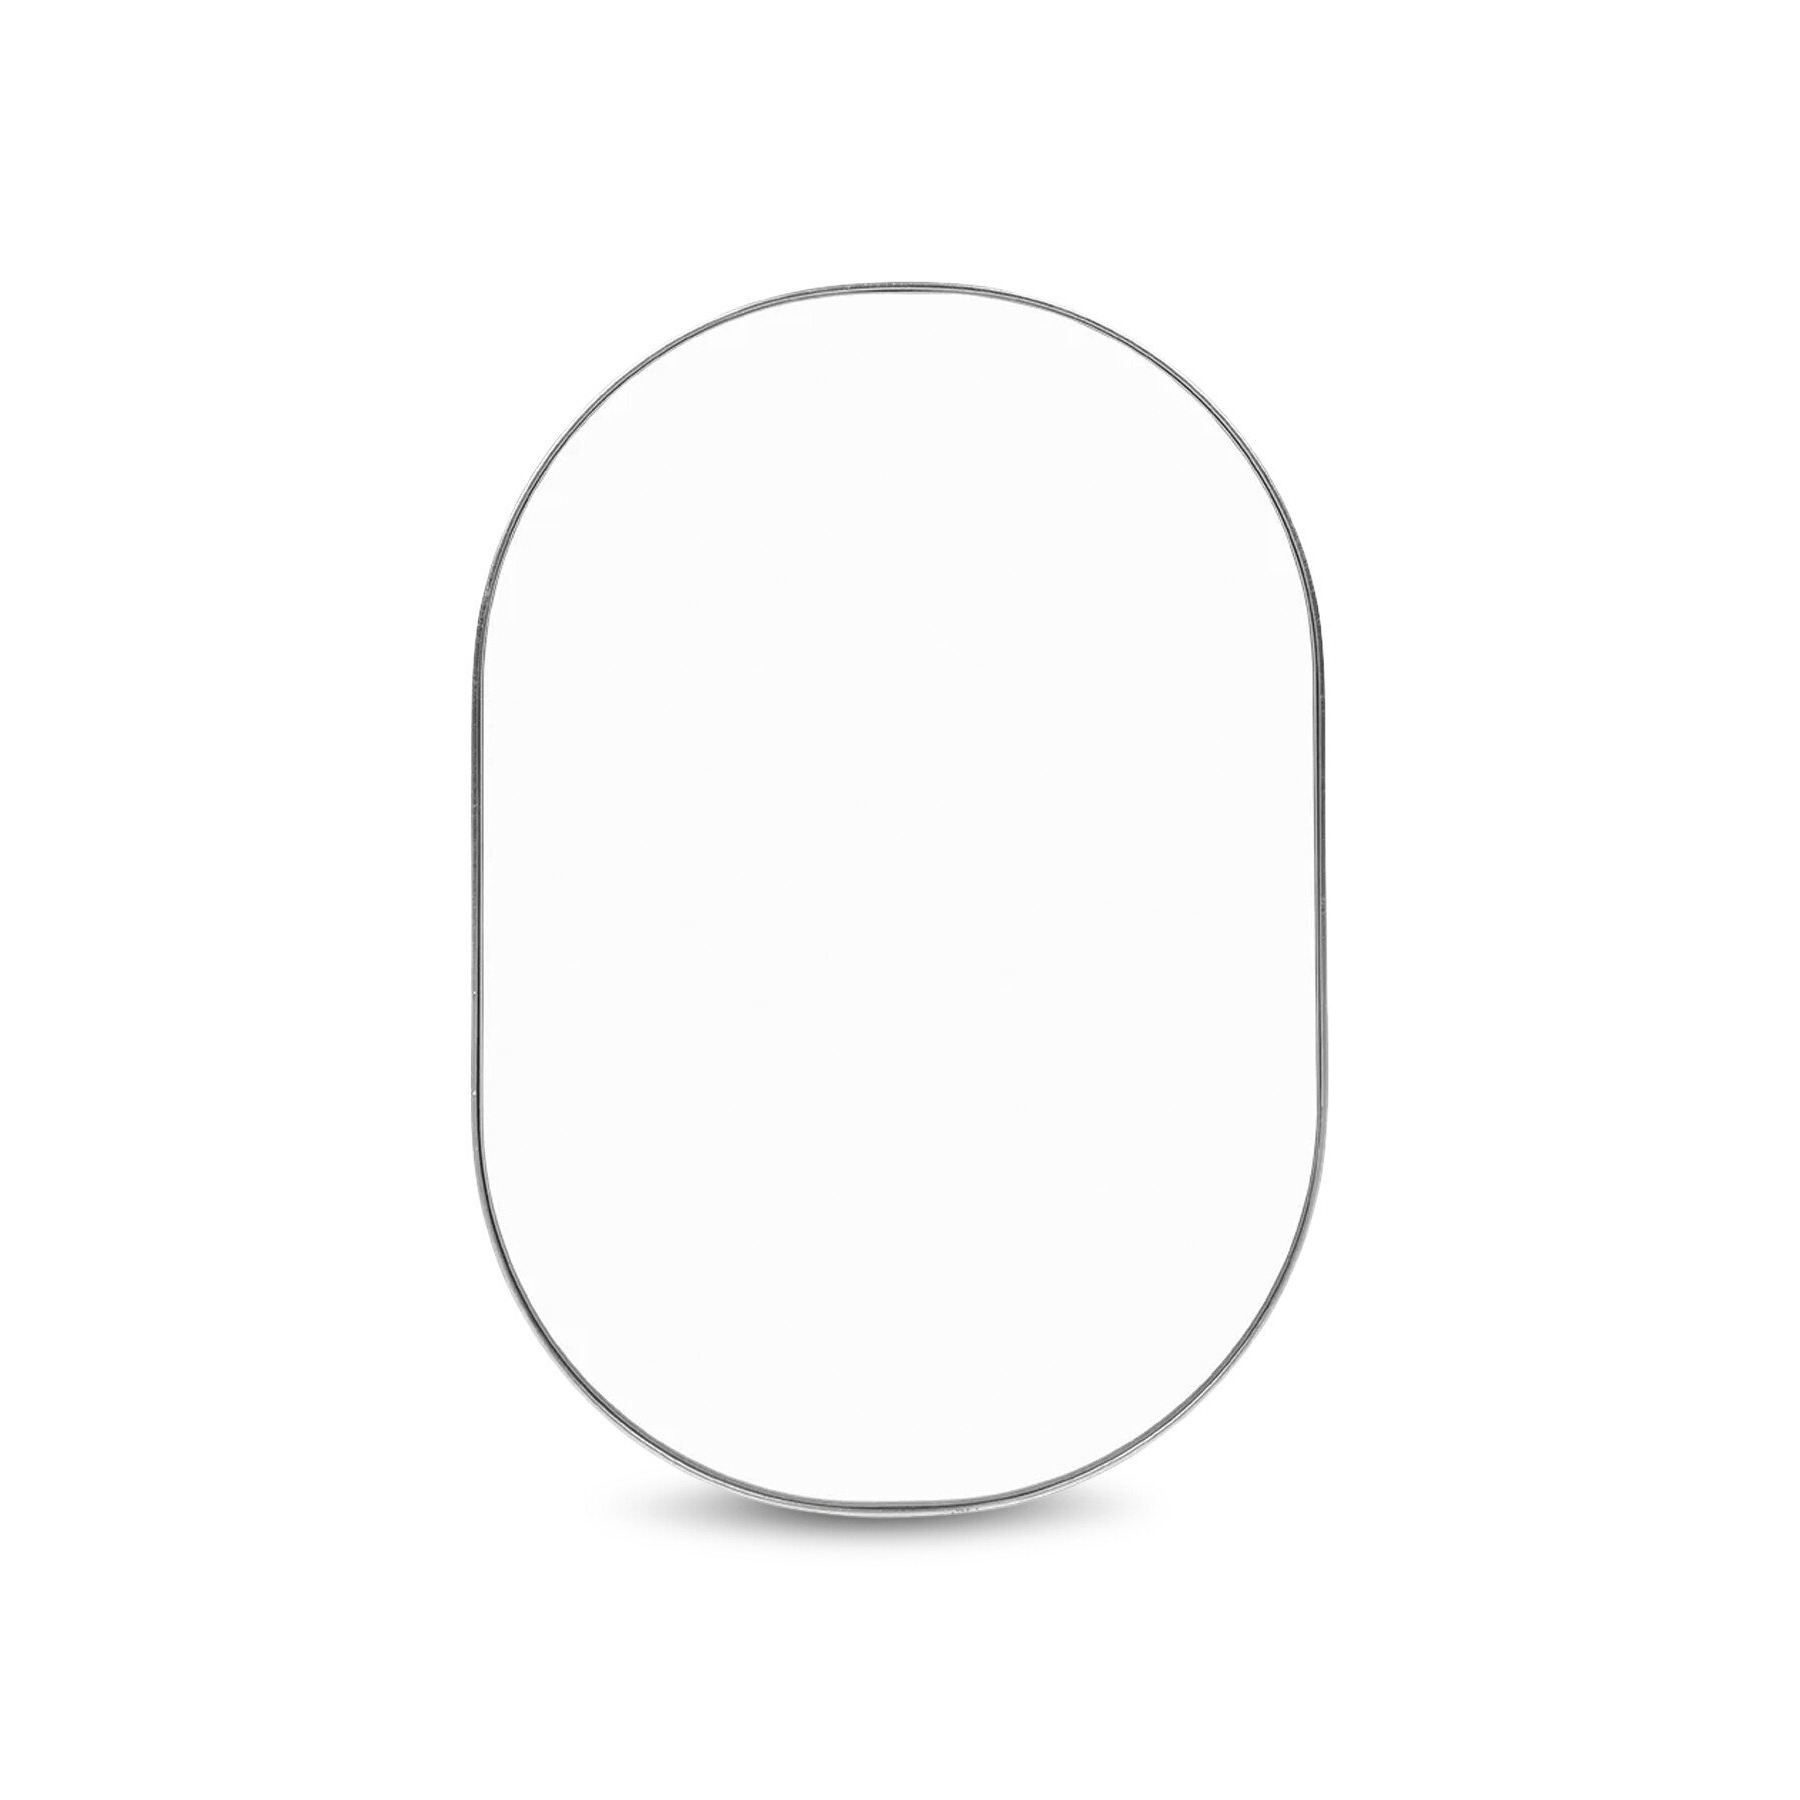 Heal's Fine Edge Mirror Oval - Size Medium Silver - image 1